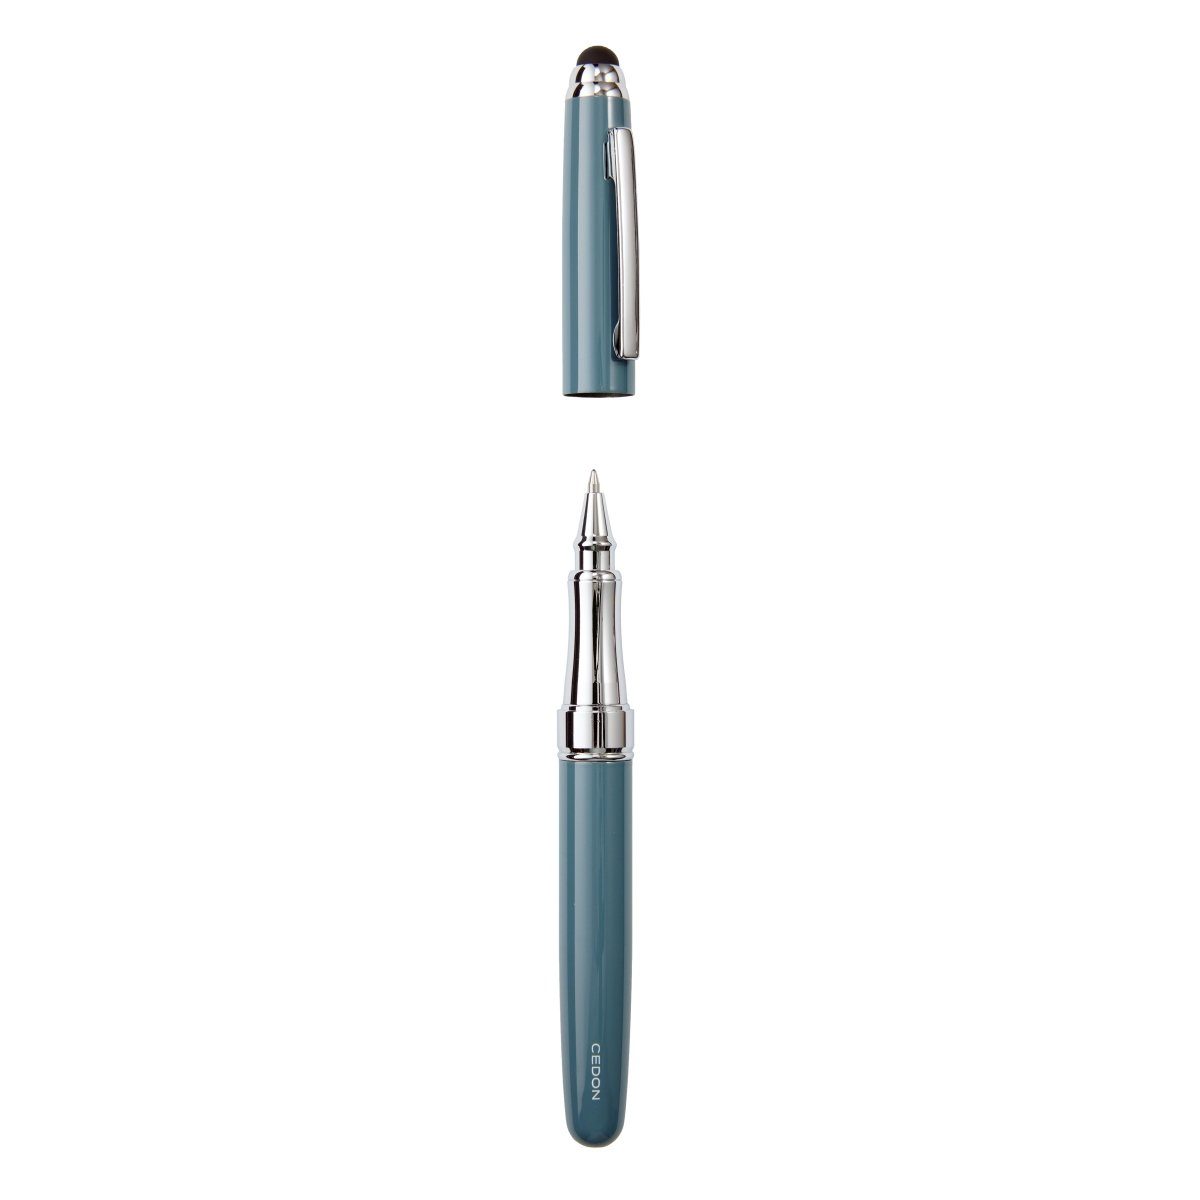 Tintenroller Blau Museum Shops Tintenroller Touch-Pen Schreibfarbe 0,7mm schwarz 14cm funktion Cedon